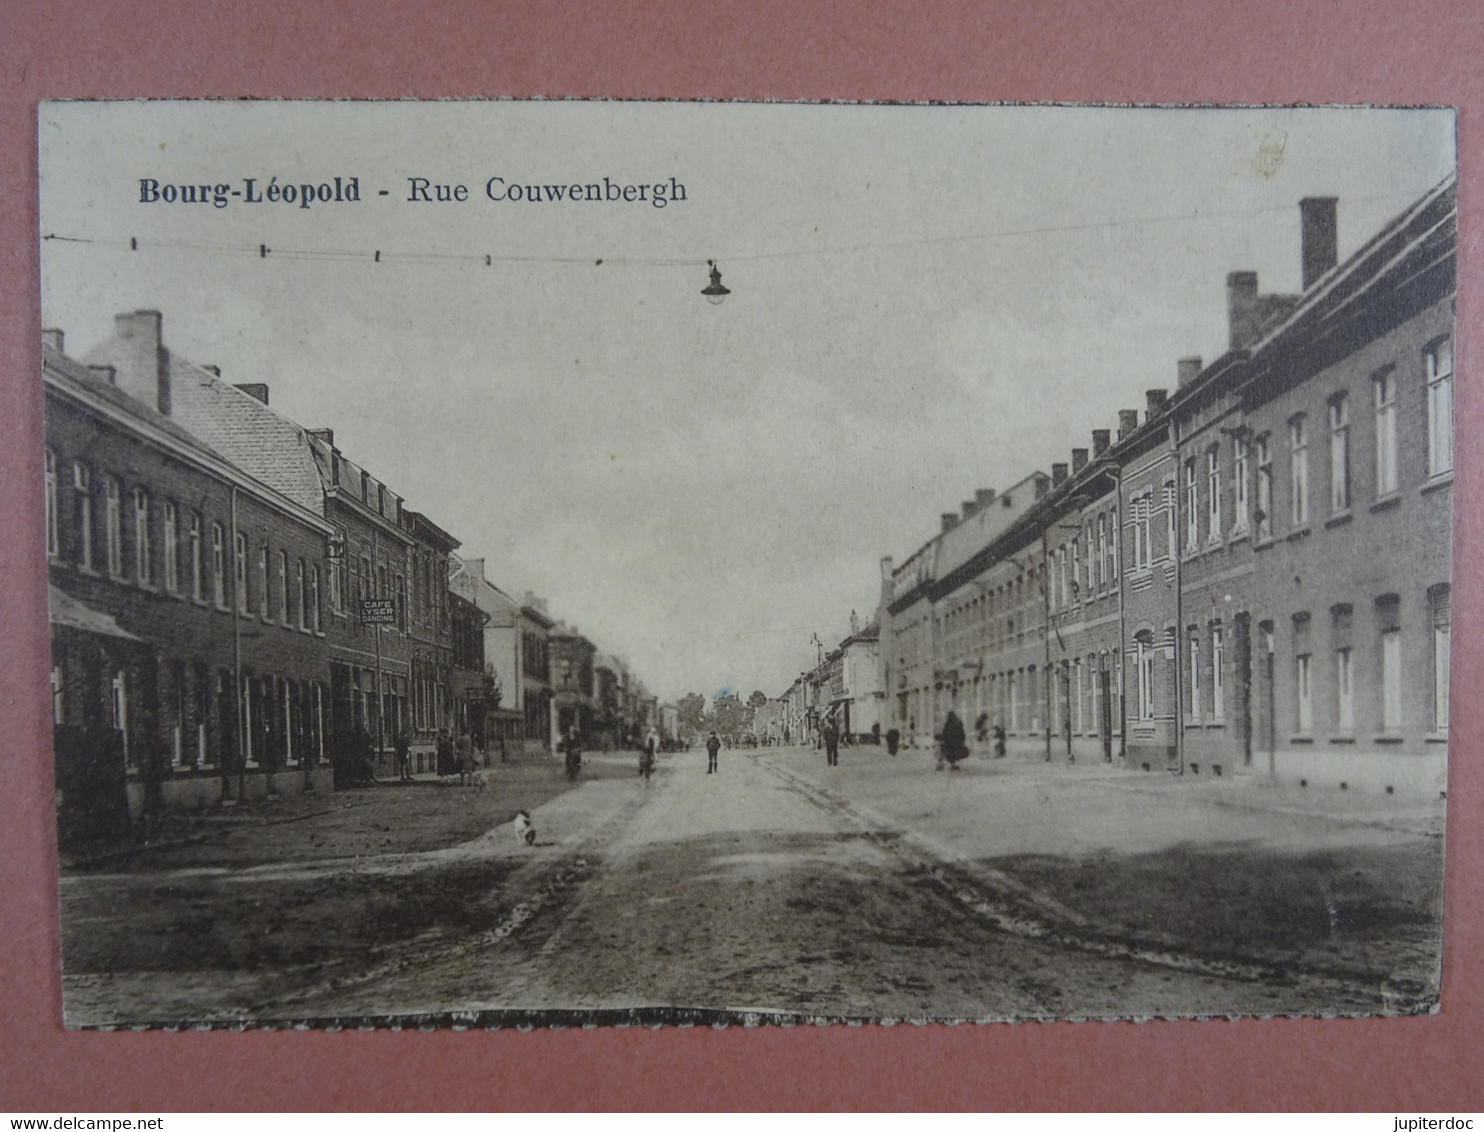 Bourg-Léopold Rue Couwenbergh - Leopoldsburg